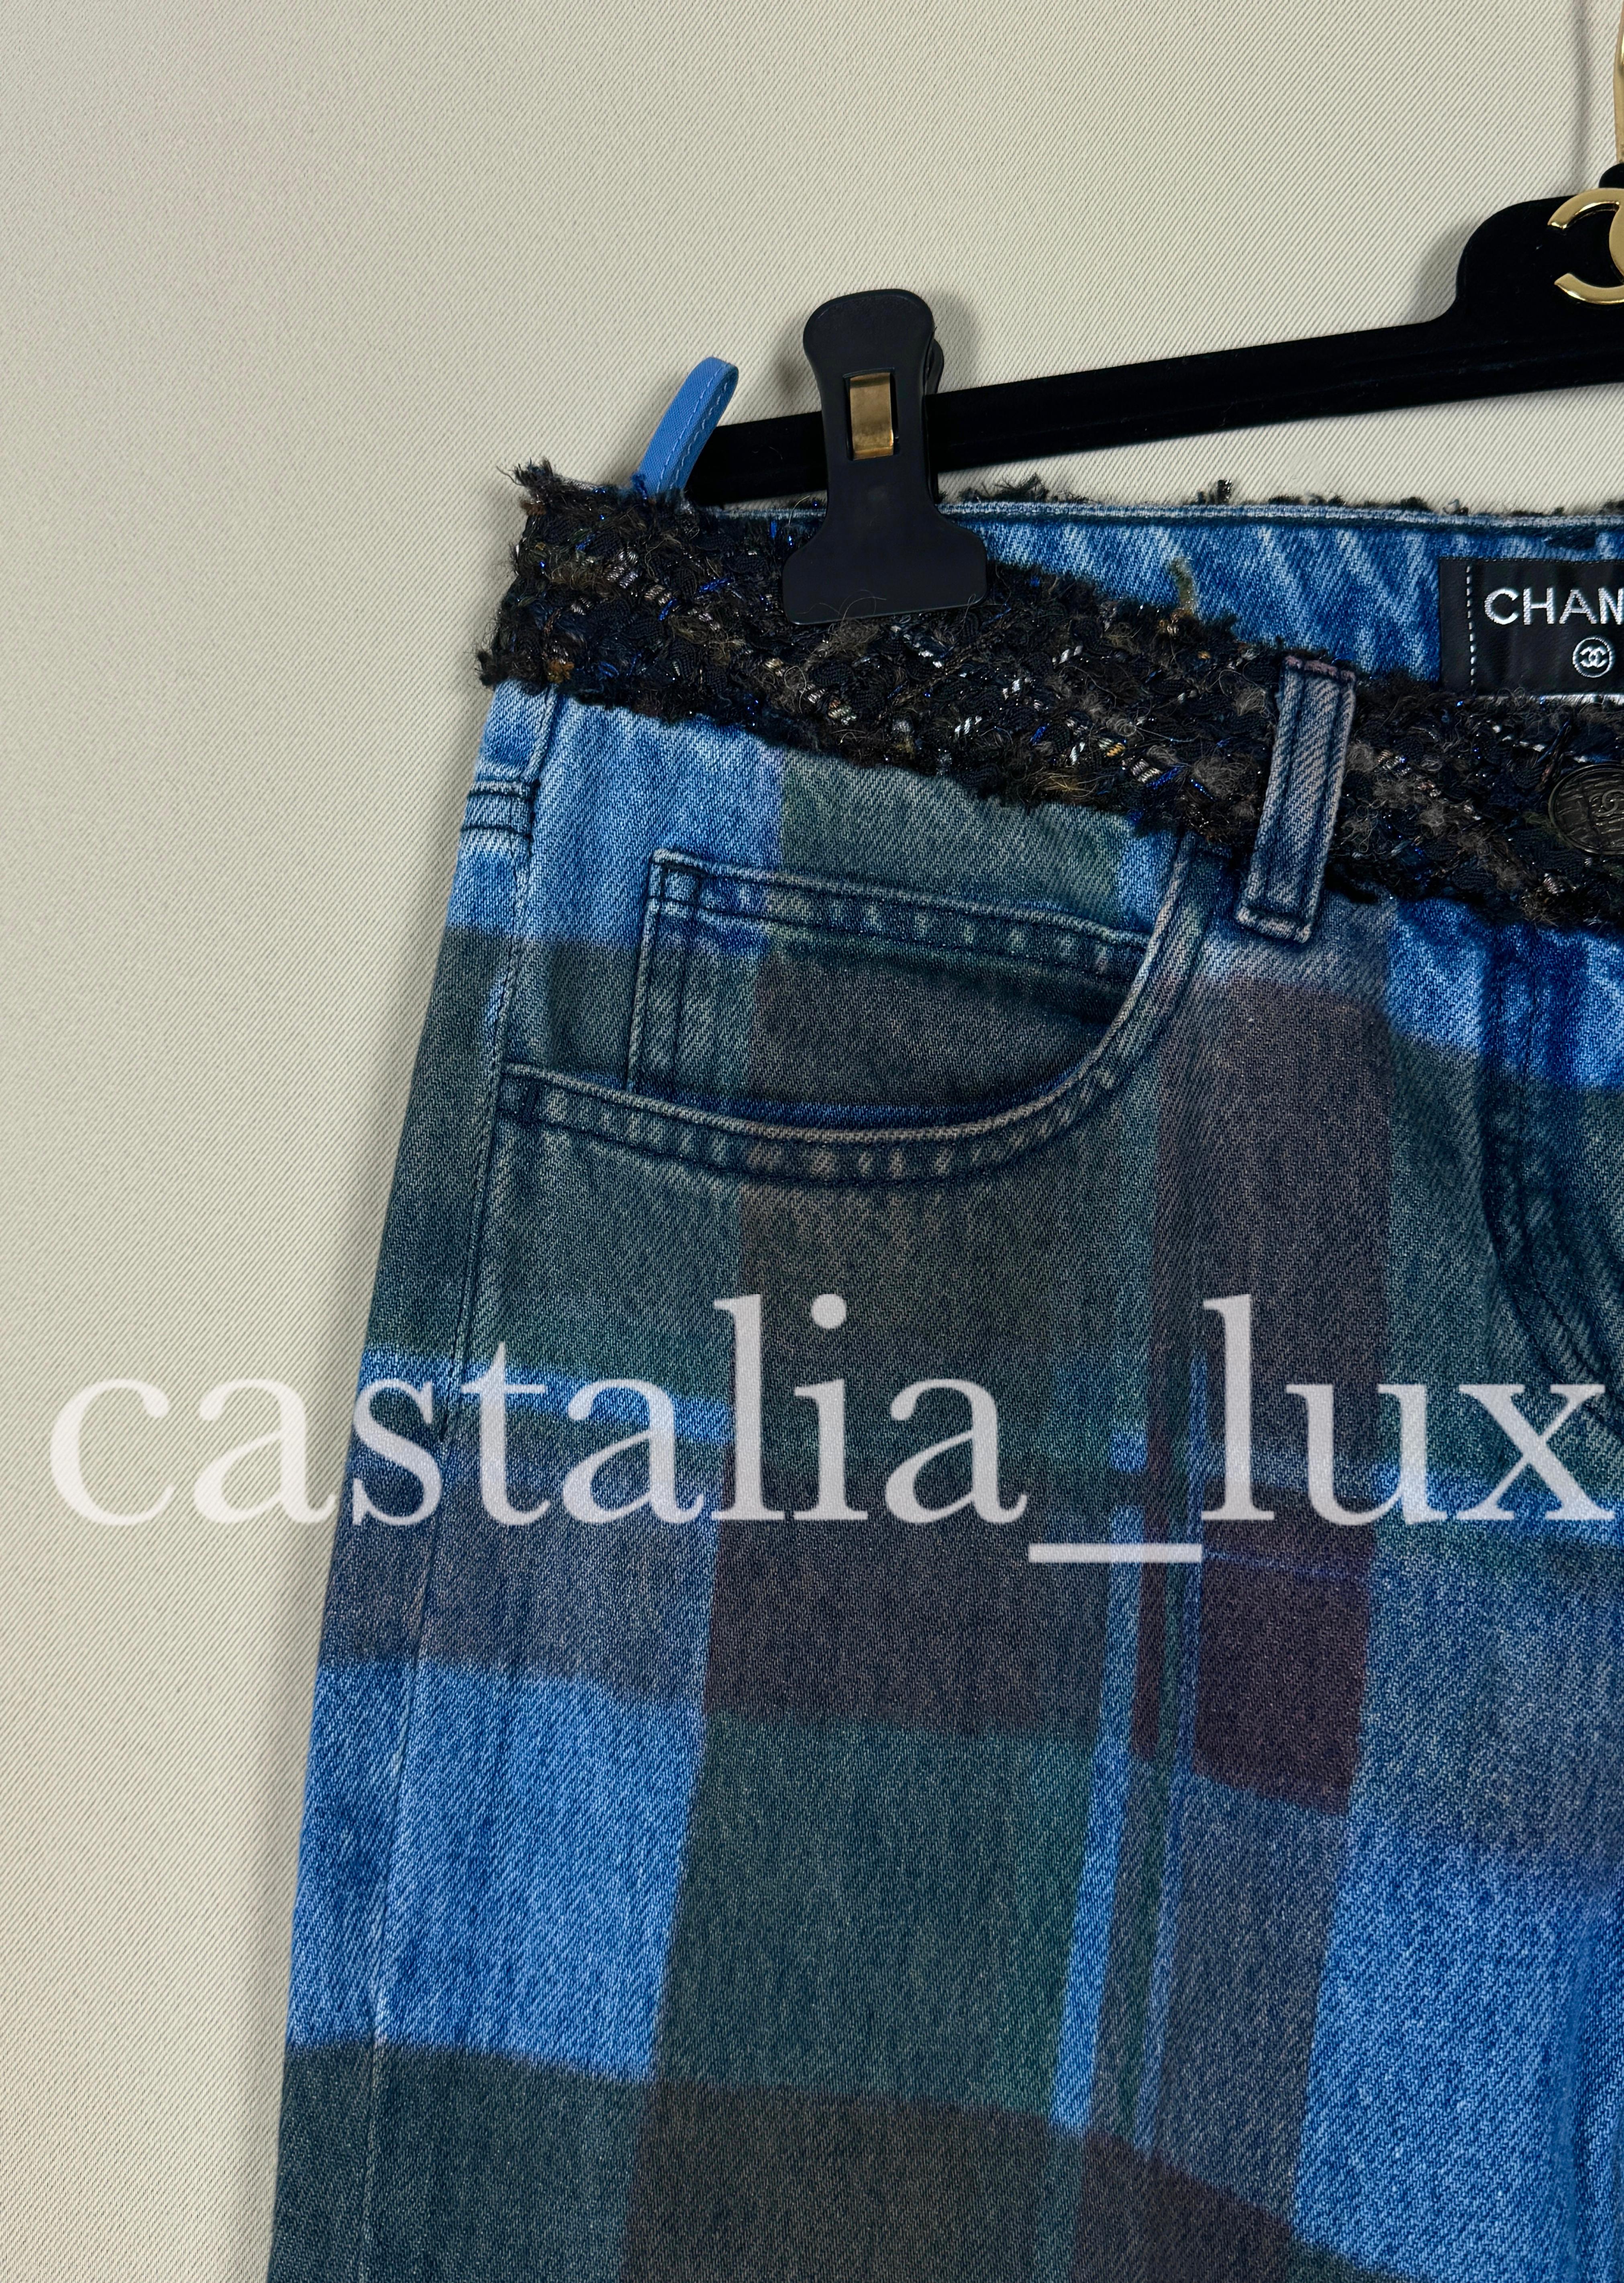 Chanel New Iconic Paris / Edinburgh Runway Tartan Jeans For Sale 7